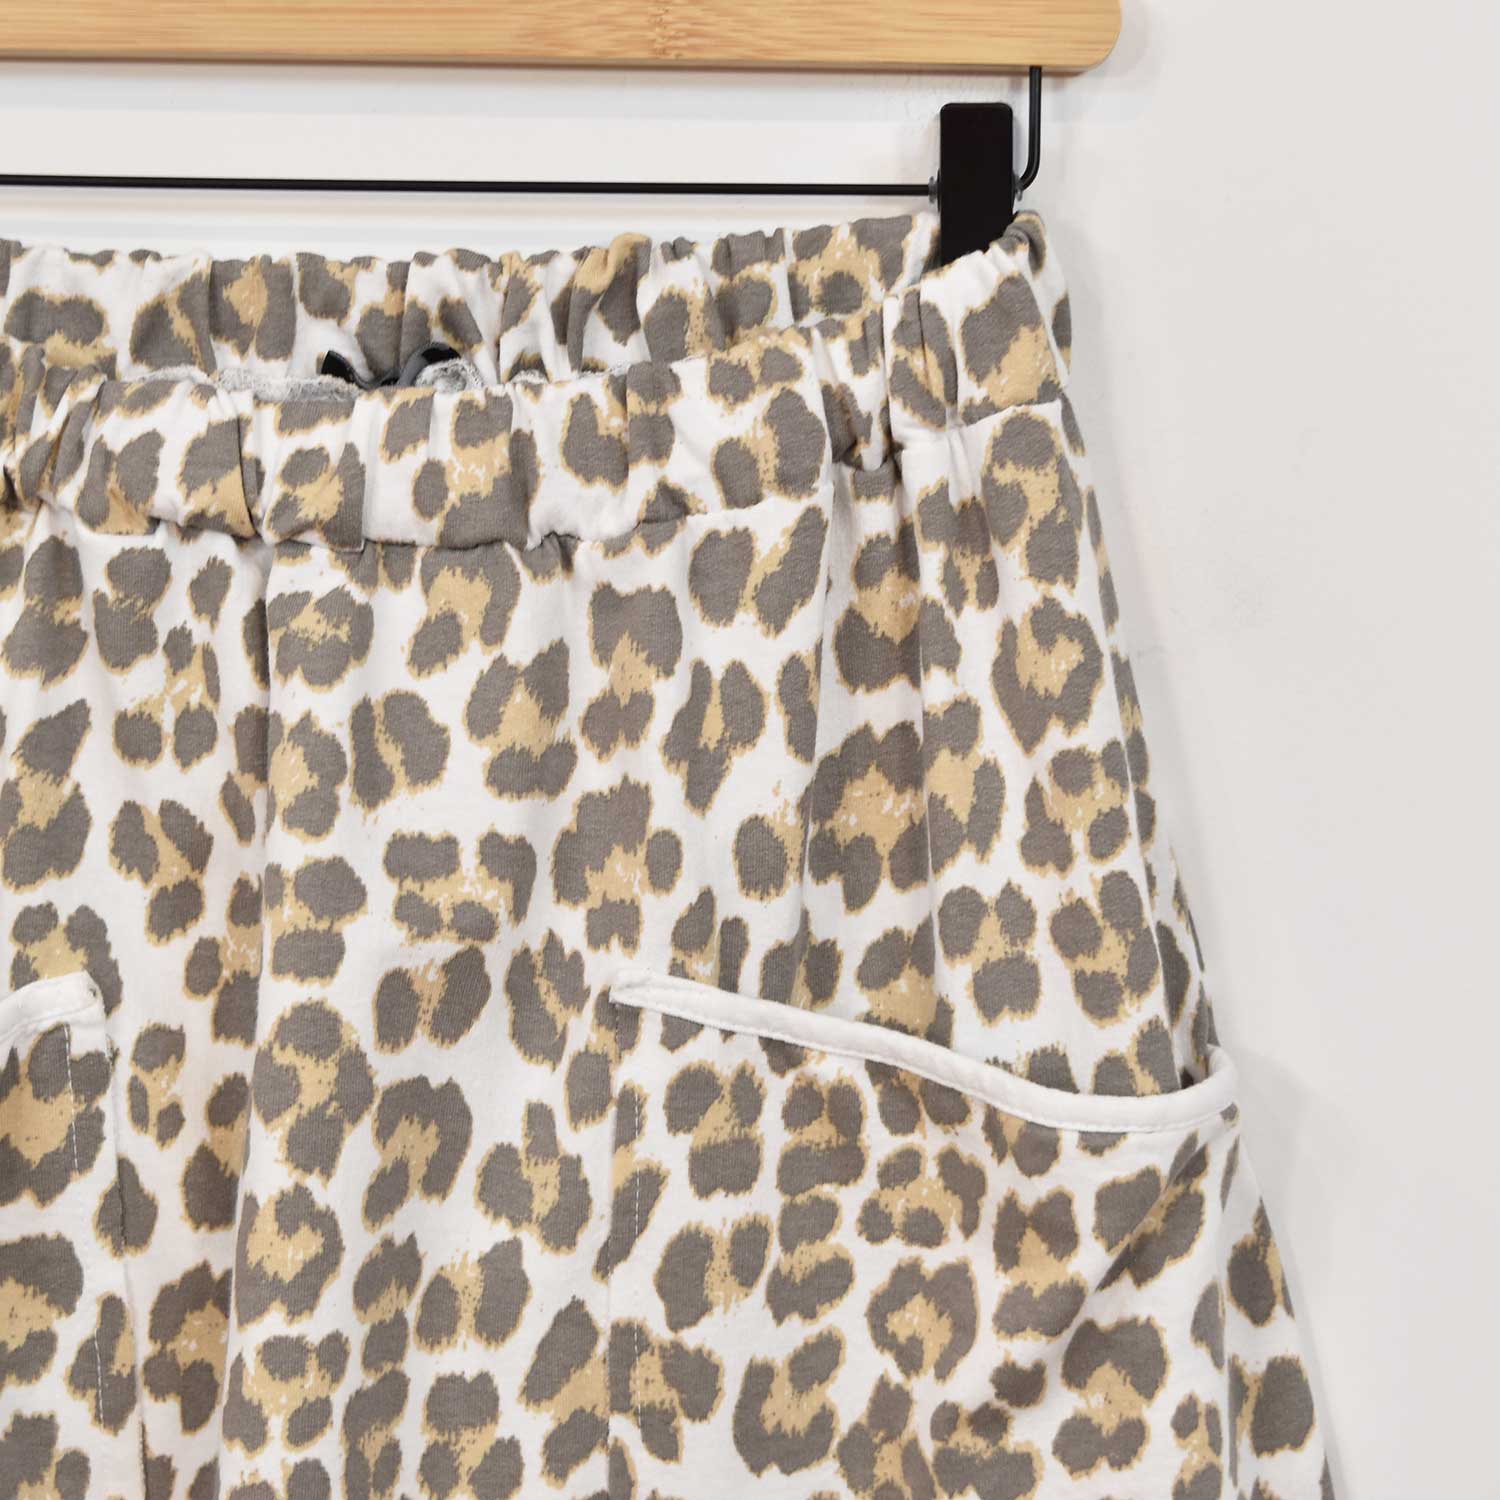 Pantalon jogger leopard poches